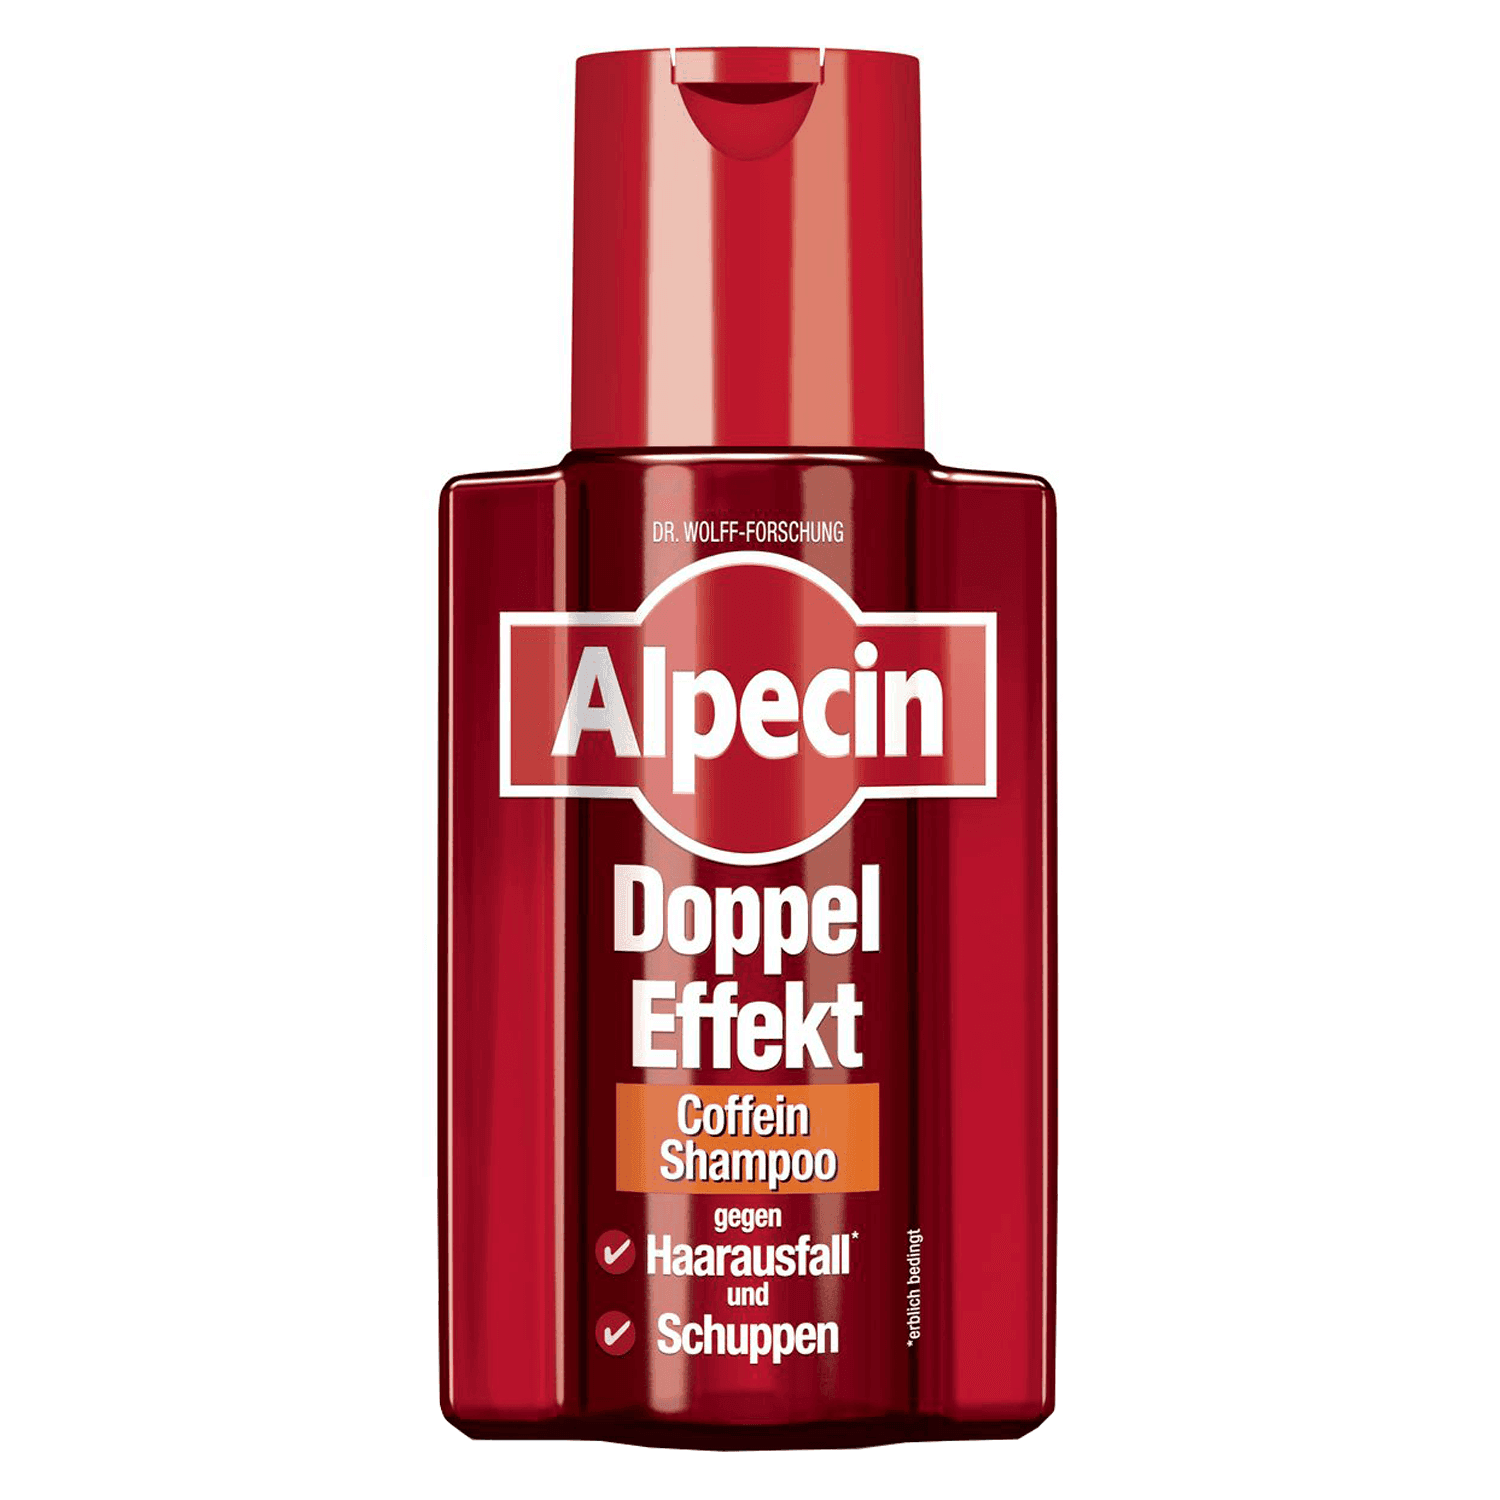 Alpecin - Double-Effect Caffeine Shampoo